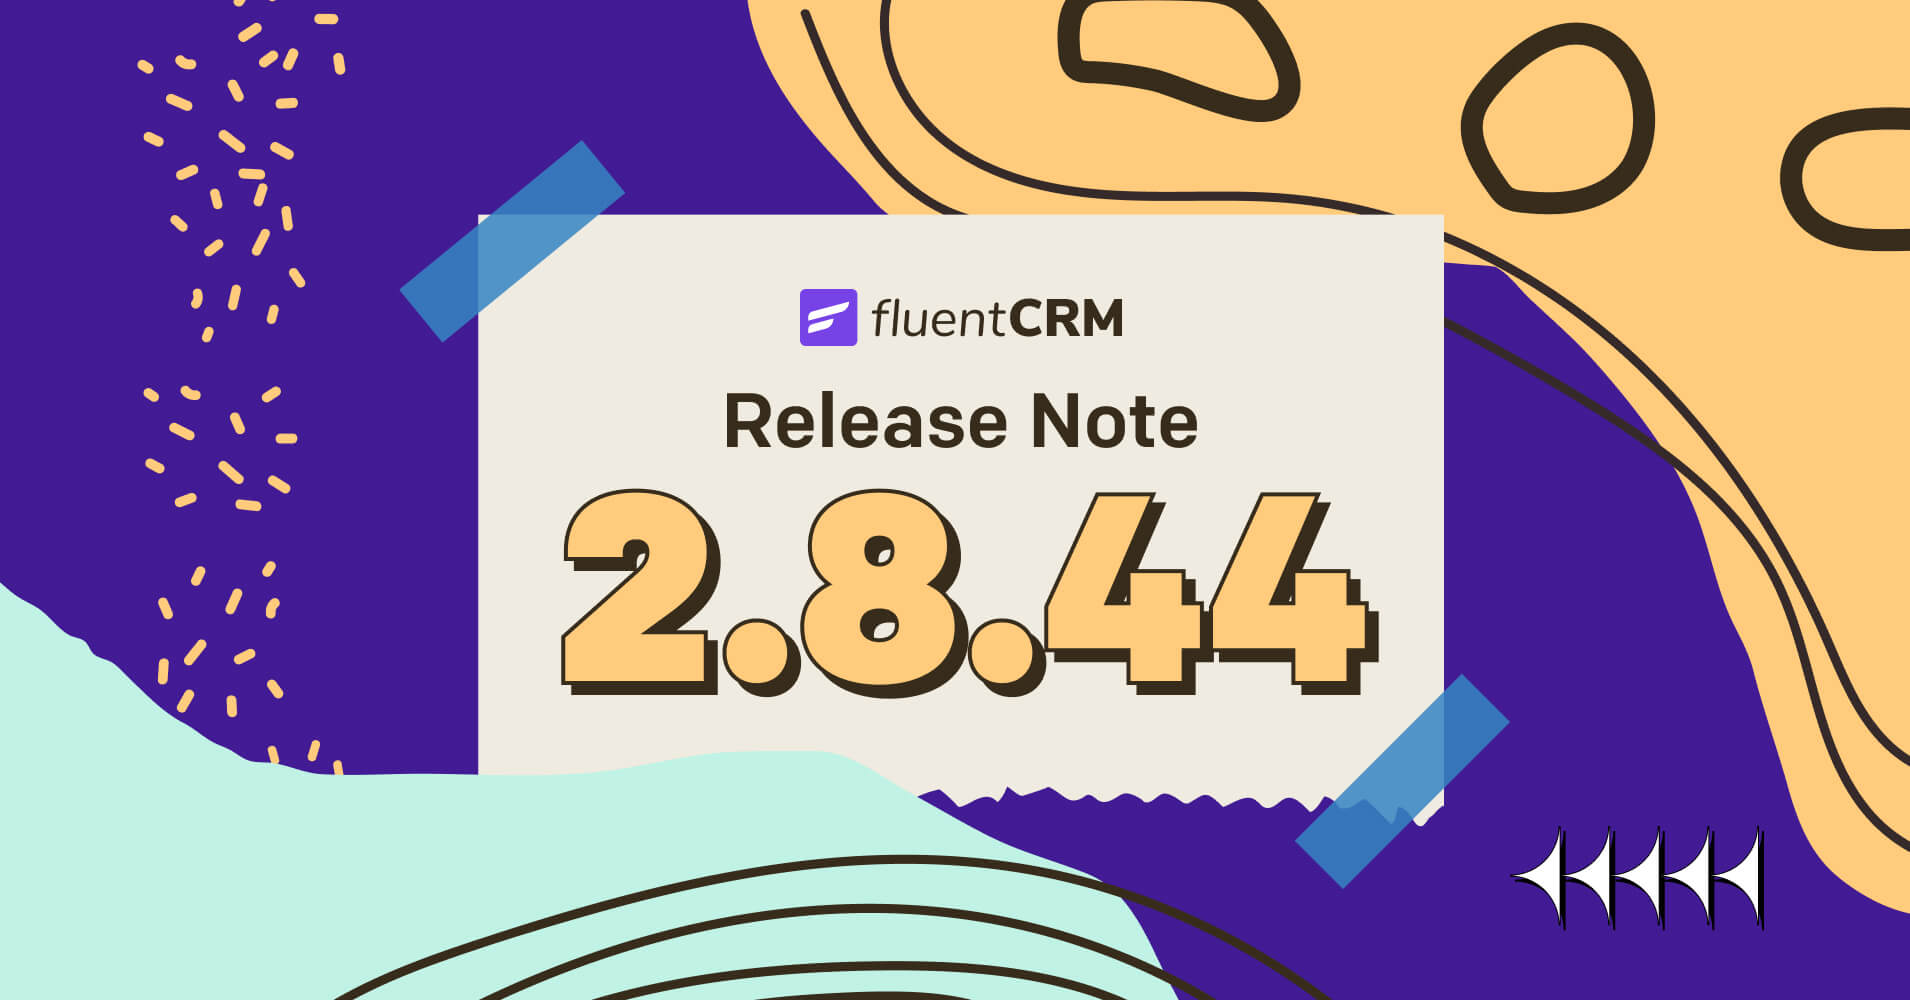 FluentCRM 2.8.44: Campaign Sharing, Multi-threaded Email Sending Optimization & More Enhancements